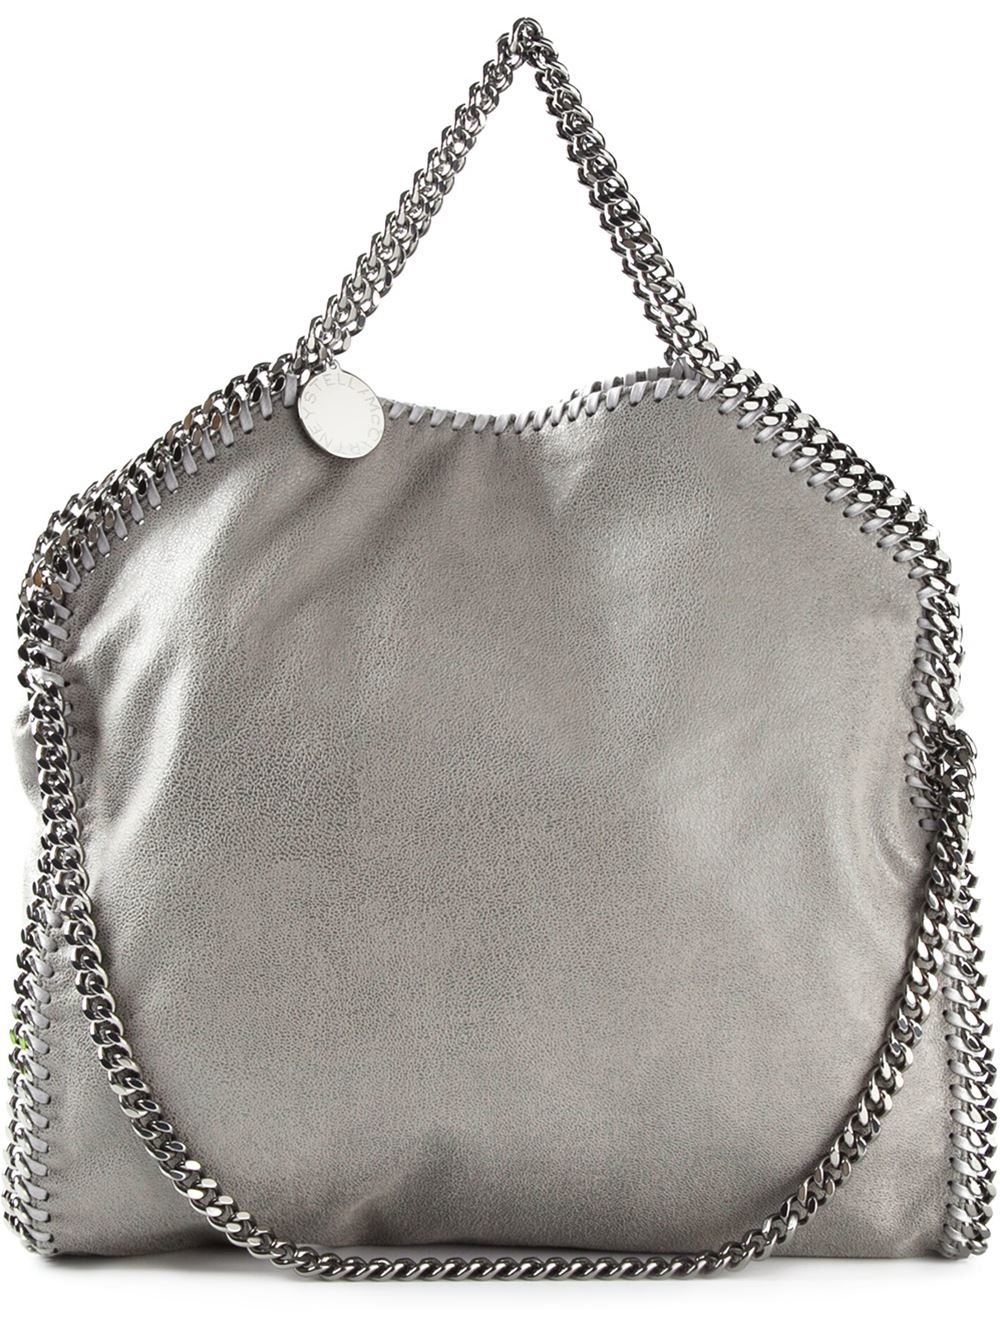 Stella McCartney Synthetic 3 Chain Falabella Bag in Gray | Lyst